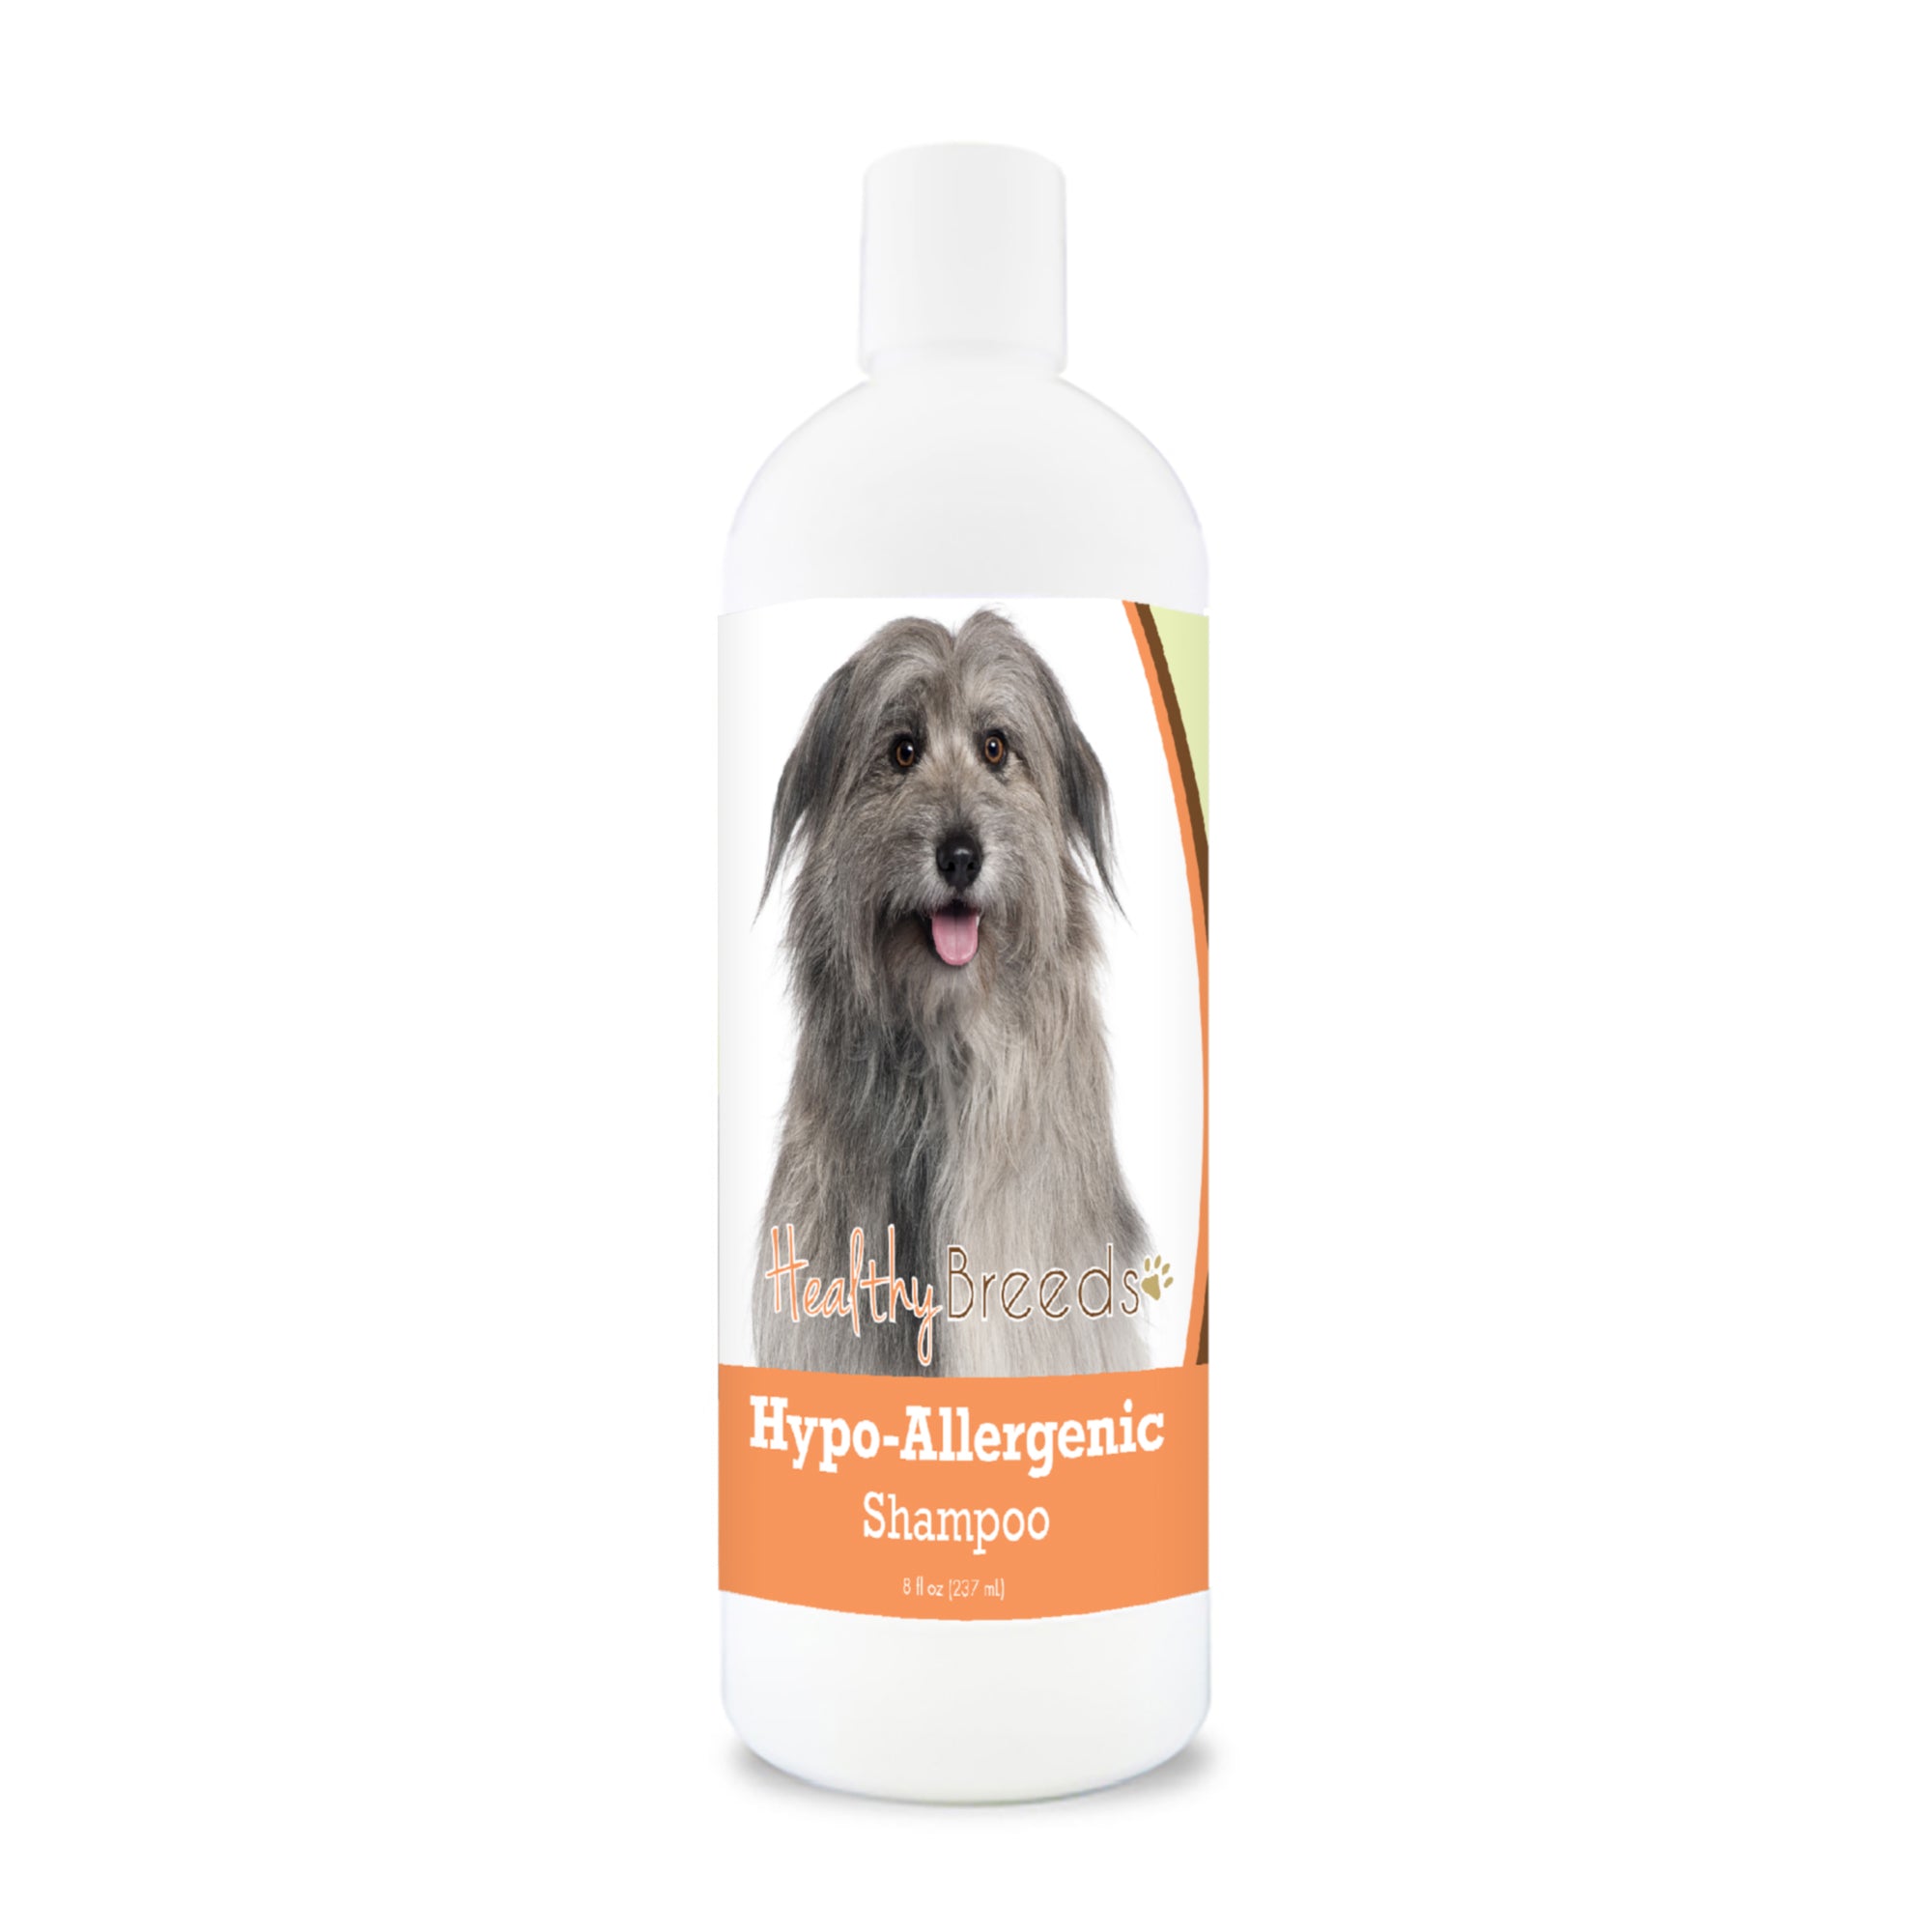 Pyrenean Shepherd Hypo-Allergenic Shampoo 8 oz